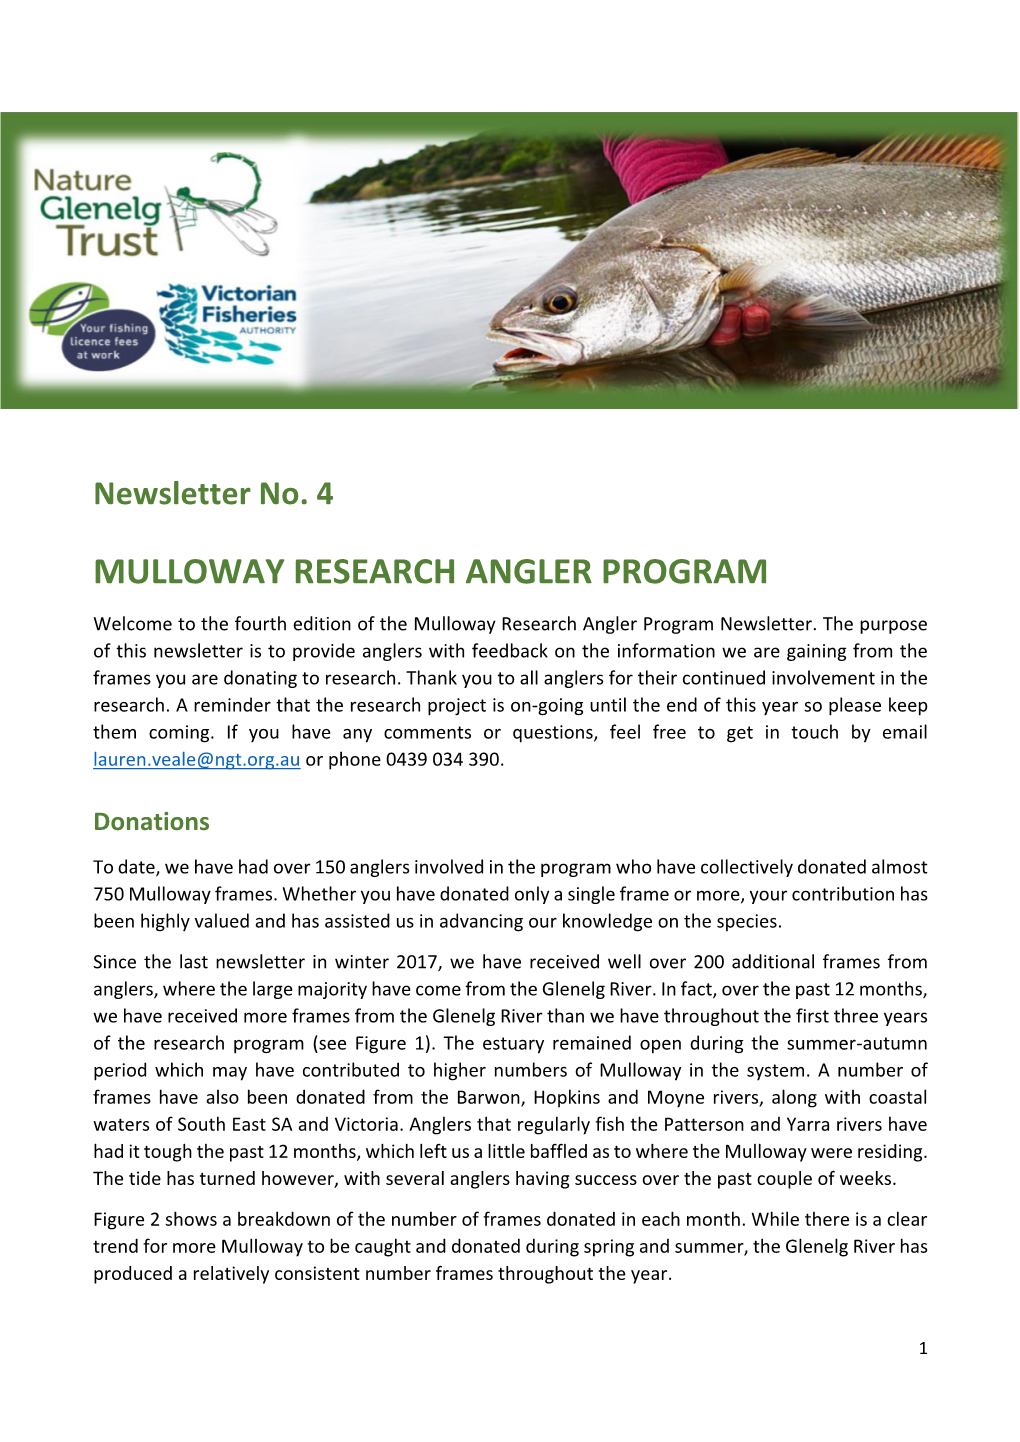 Mulloway Research Angler Program